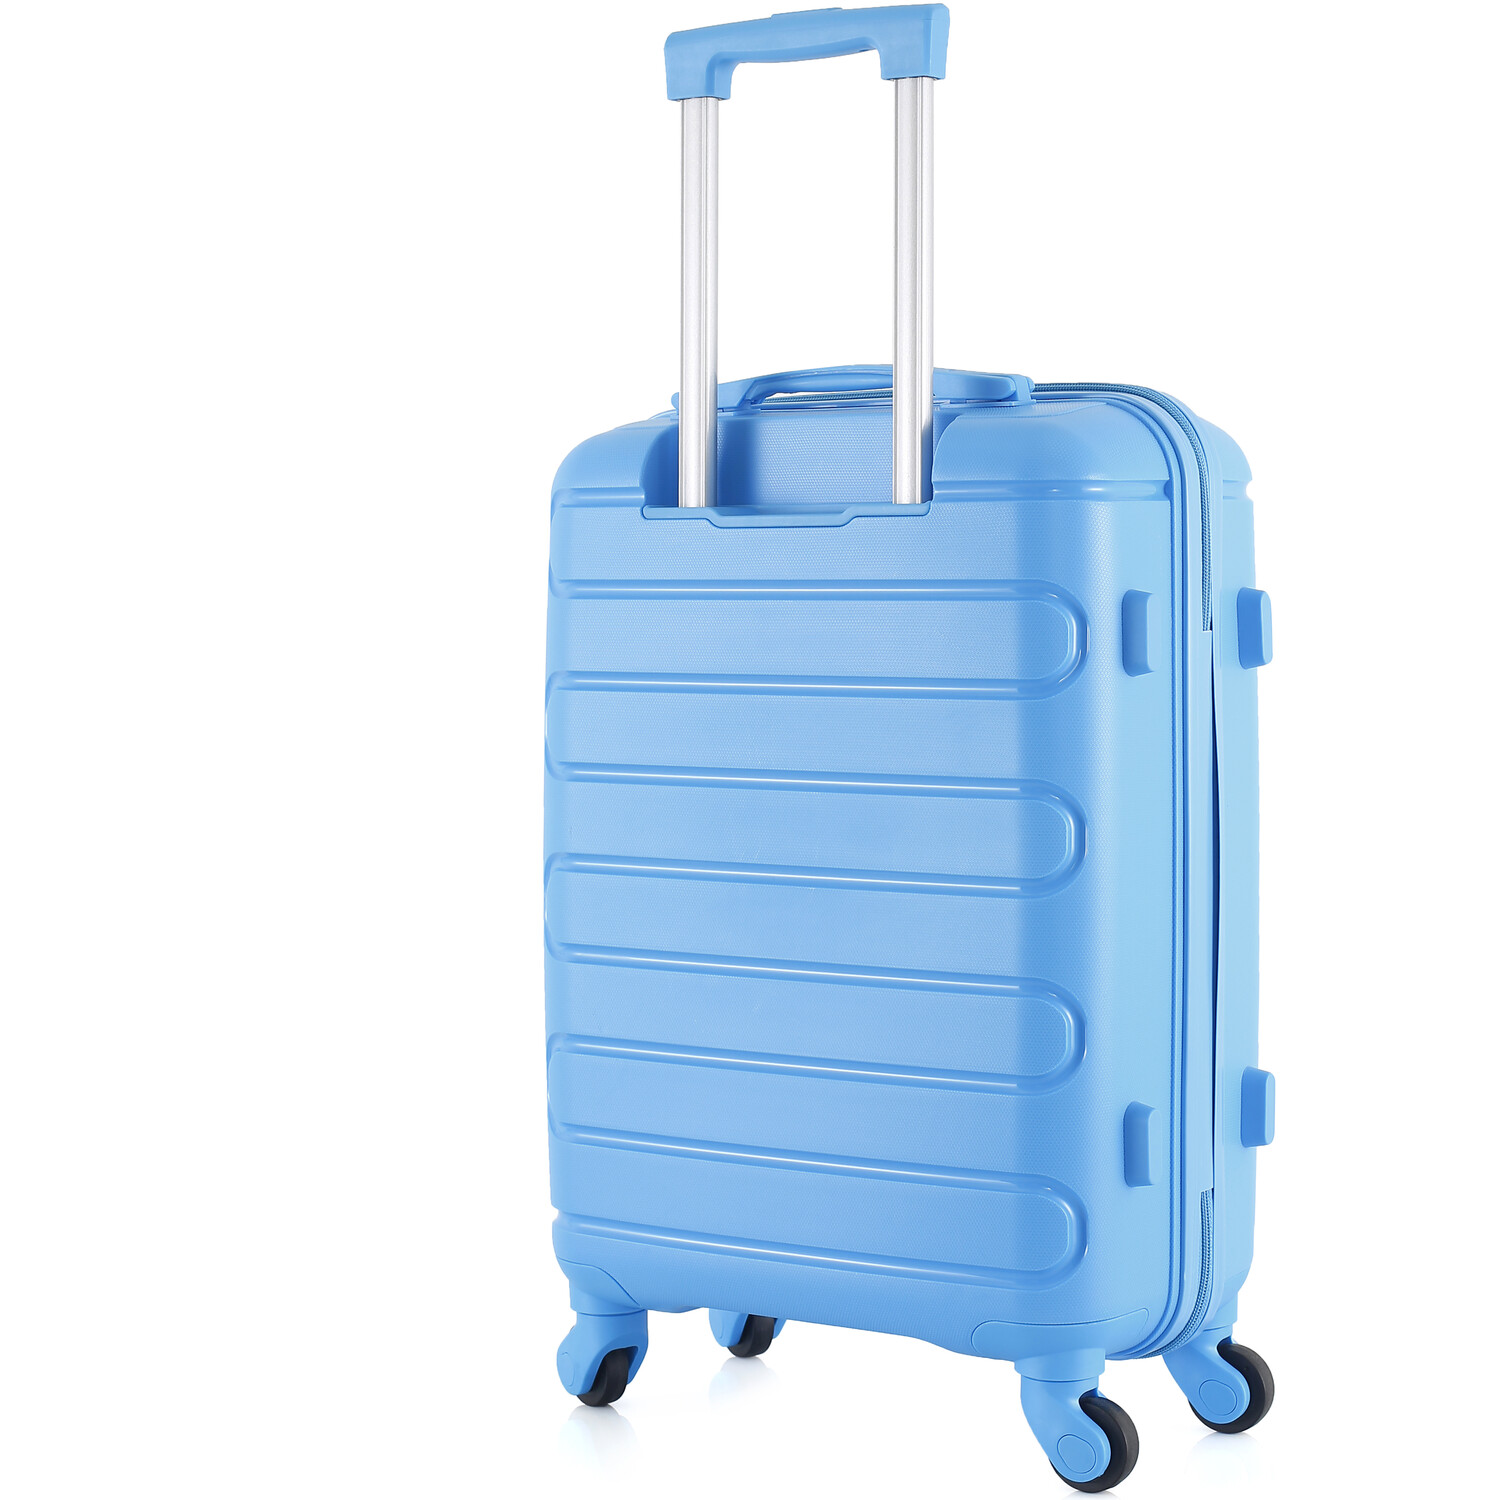 Swift Horizon Suitcase - Deep Teal / Large Case Image 3